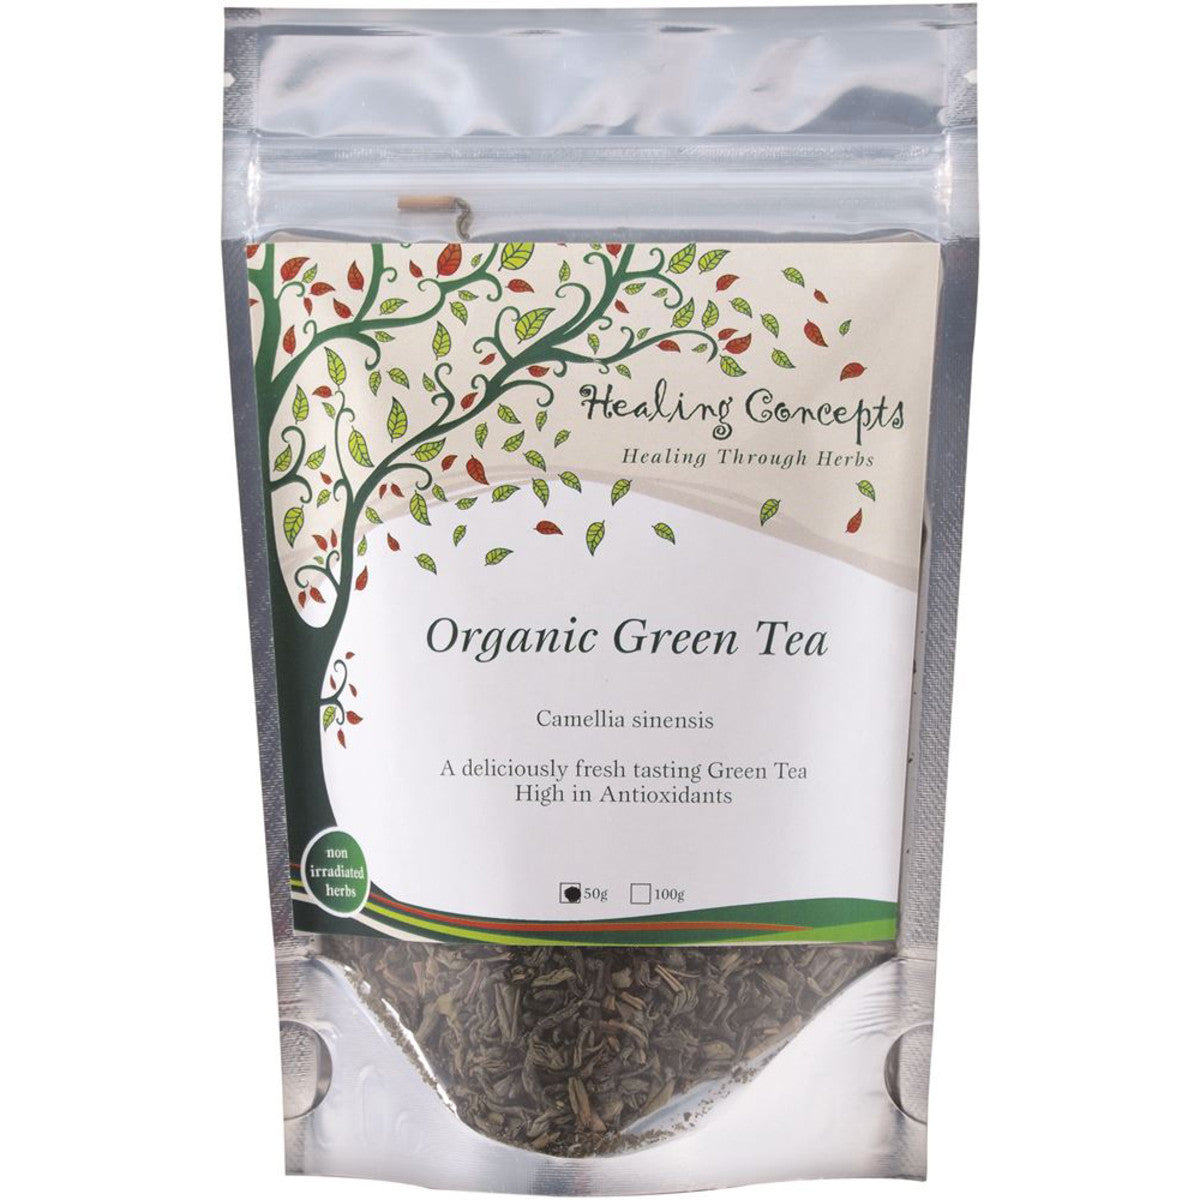 Healing Concepts Green Tea 50g, Certified Organic